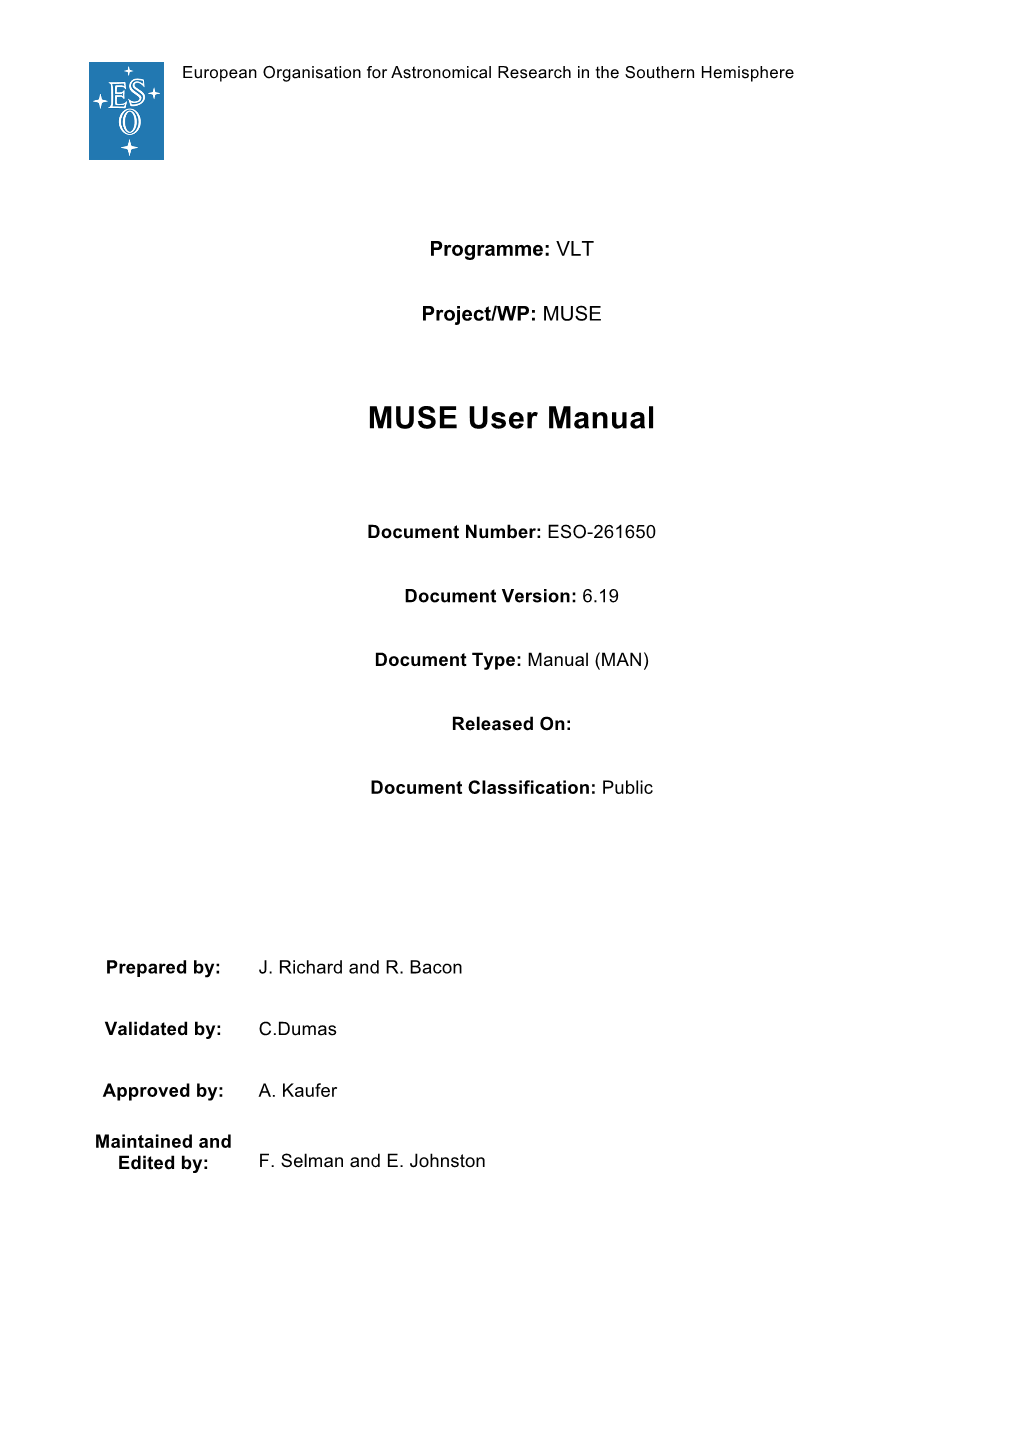 MUSE User Manual